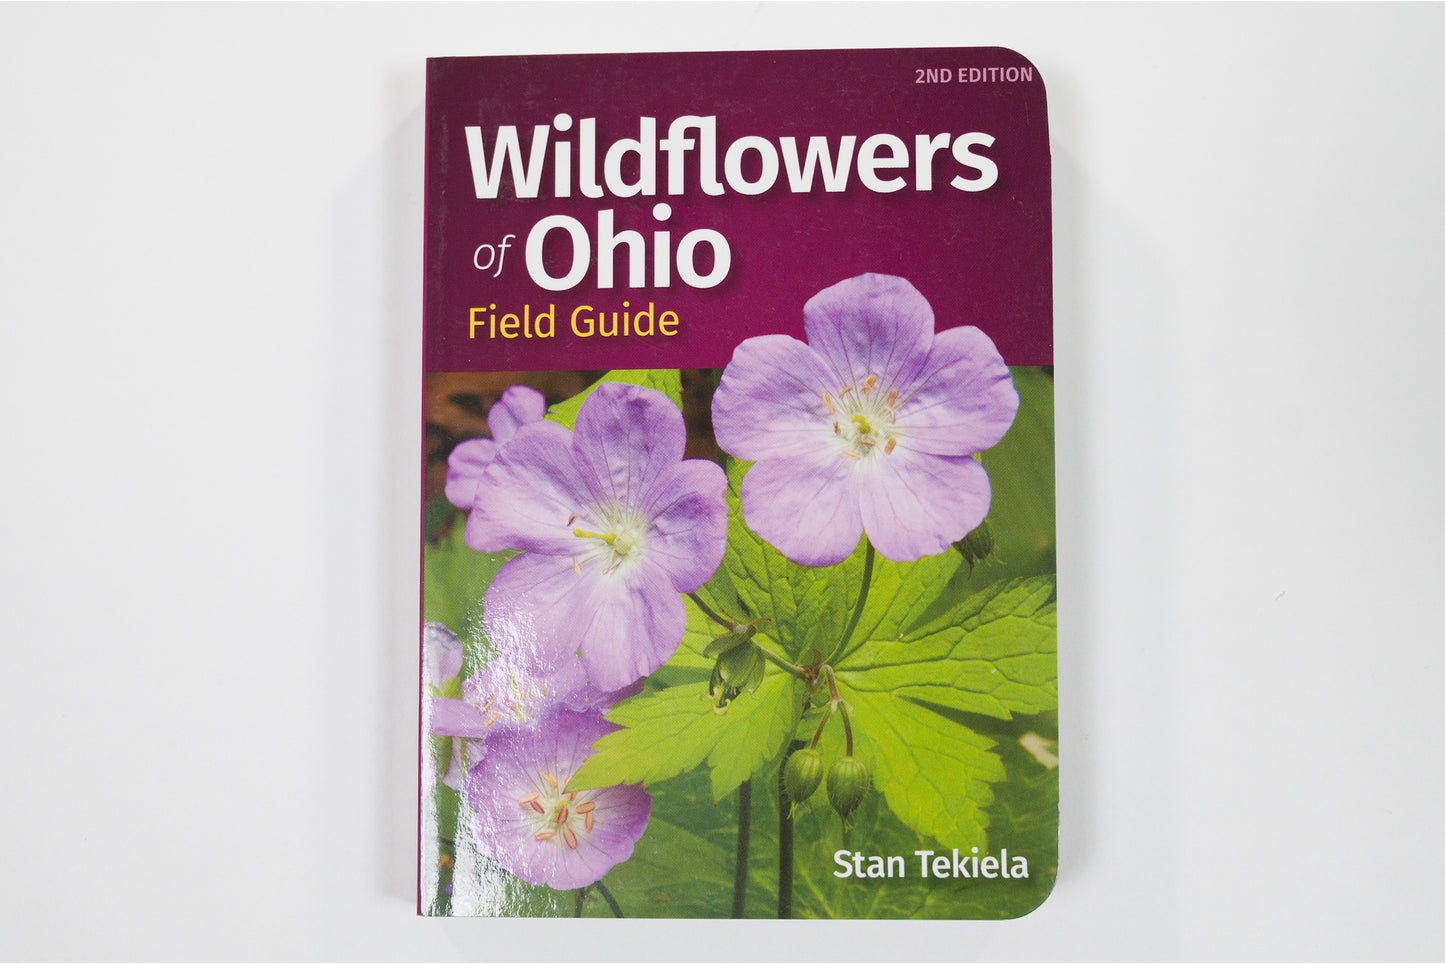 Wildflowers of Ohio field guide